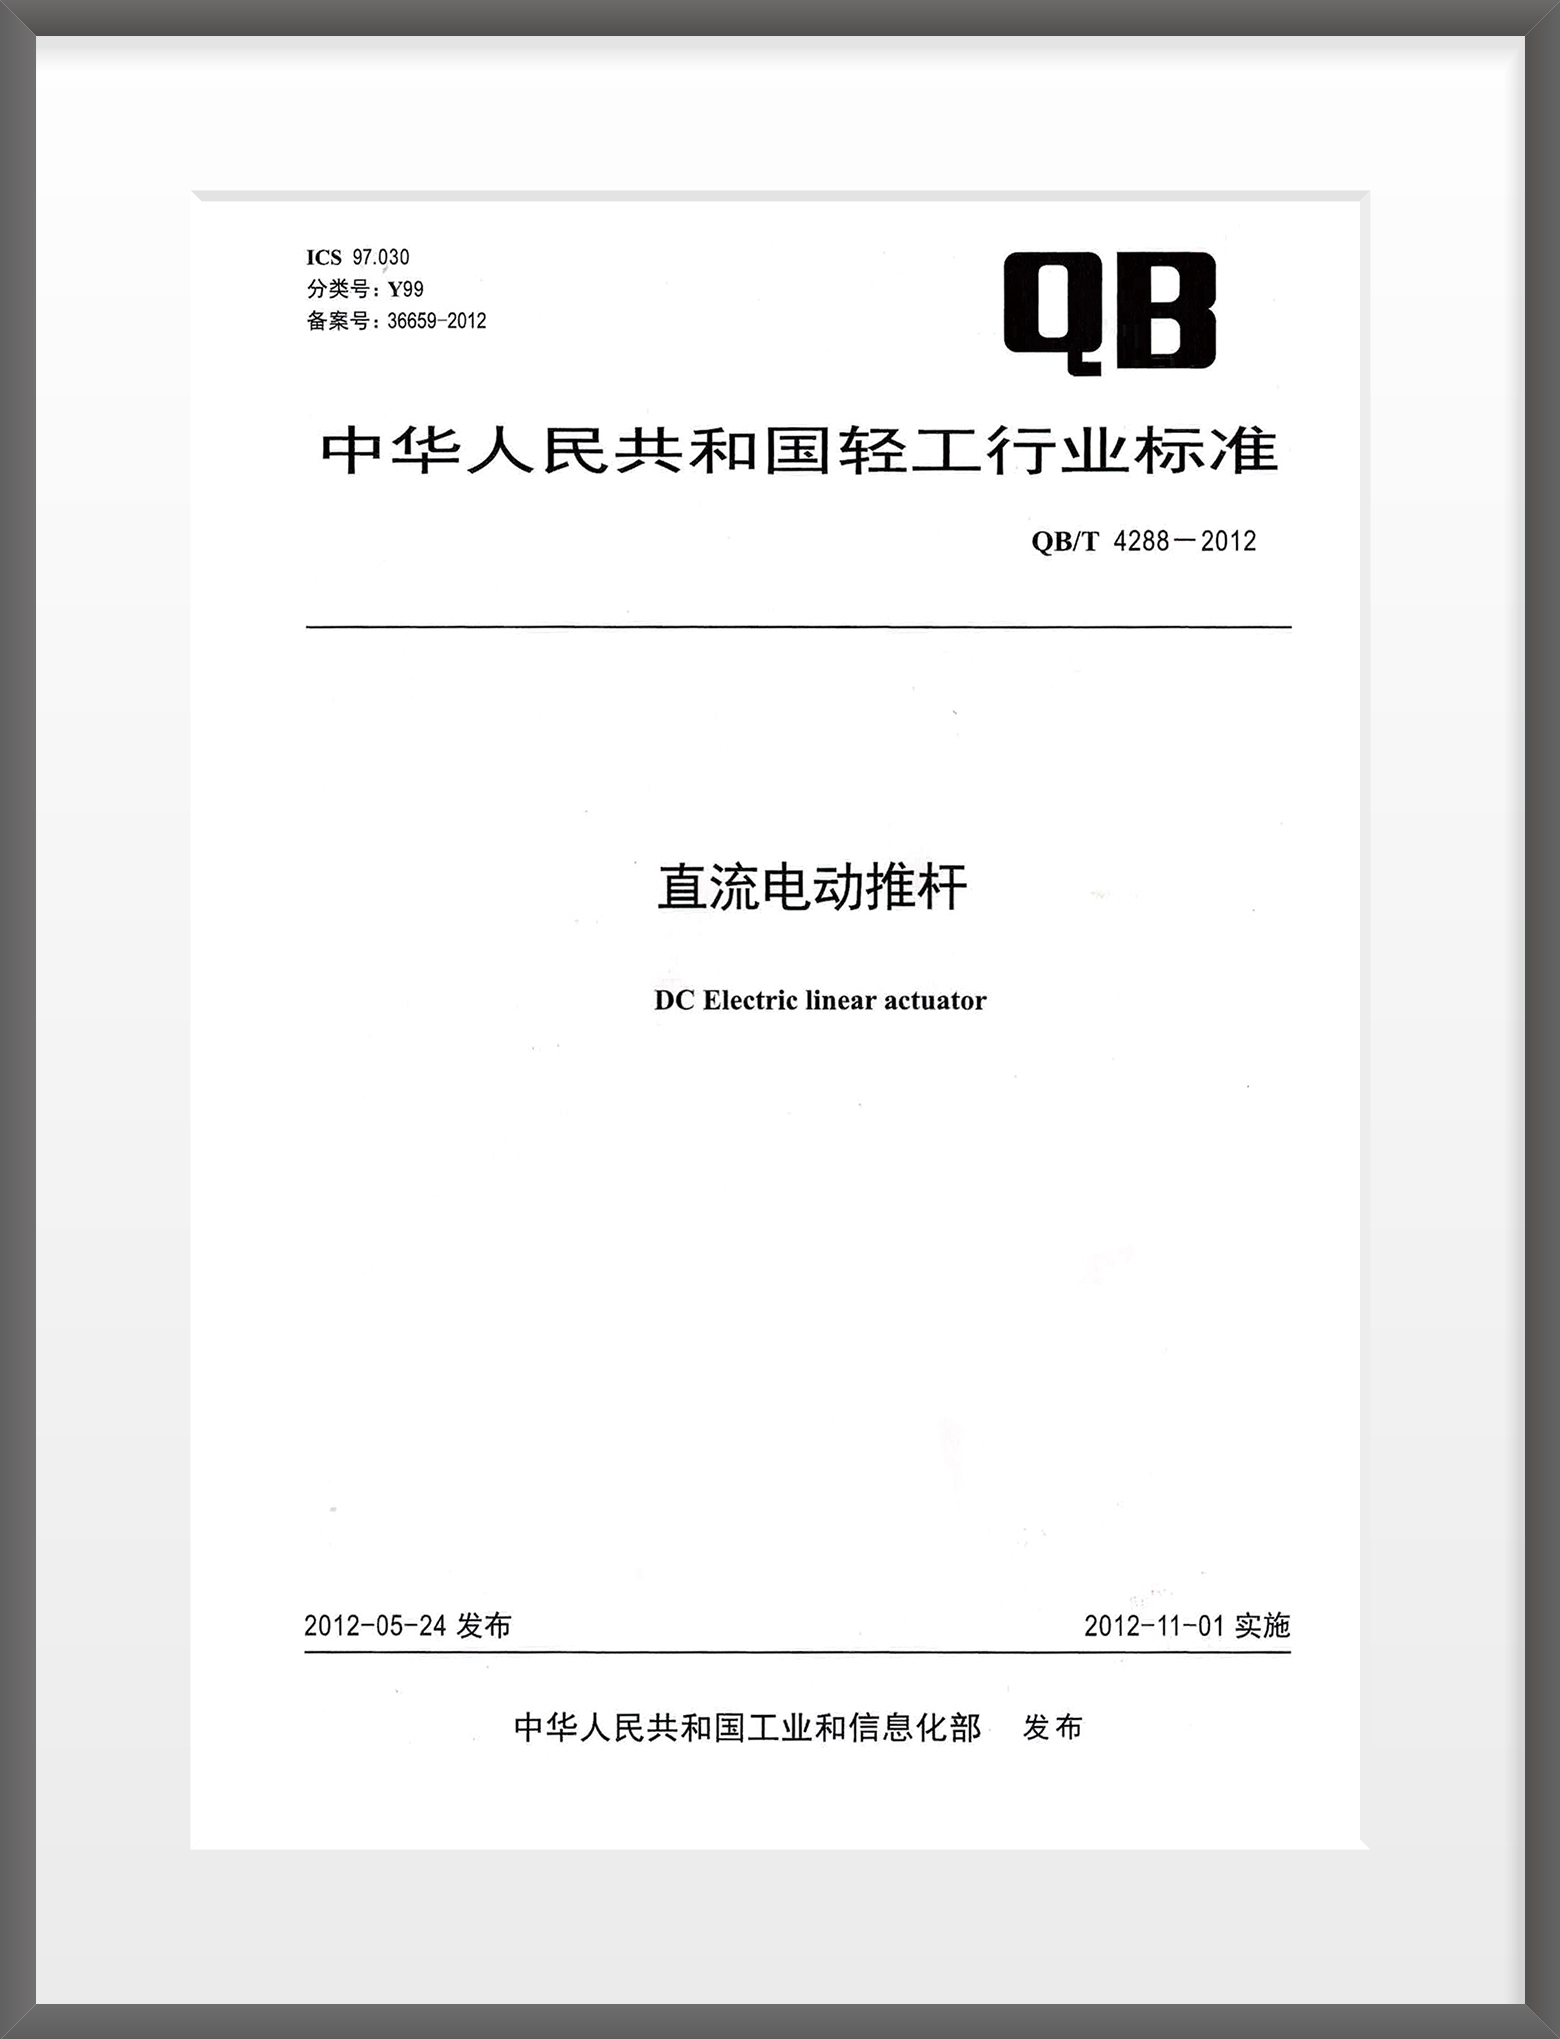 2008，Draft China DC Electric push rod industry standard